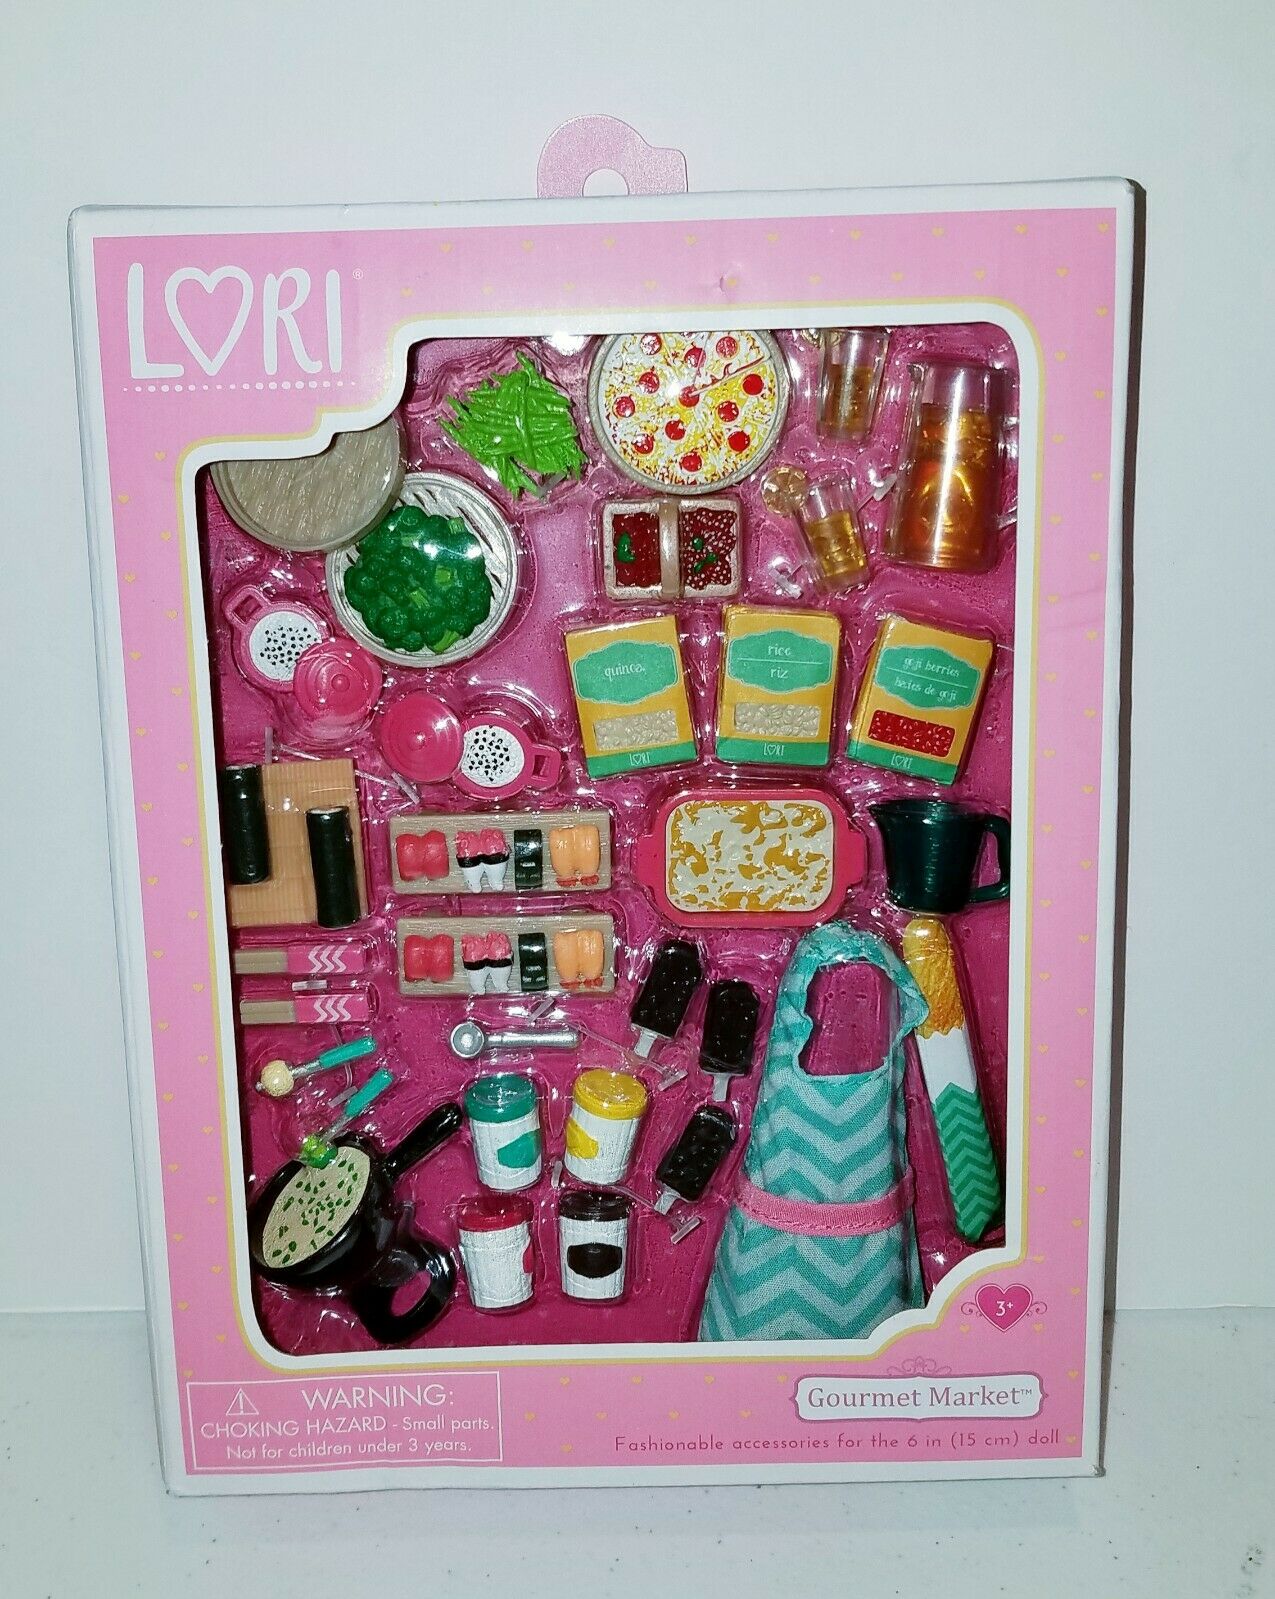 Lori Doll Our Generation 6” Doll Gourmet Market Food Accessory Set Fits Mini Ag